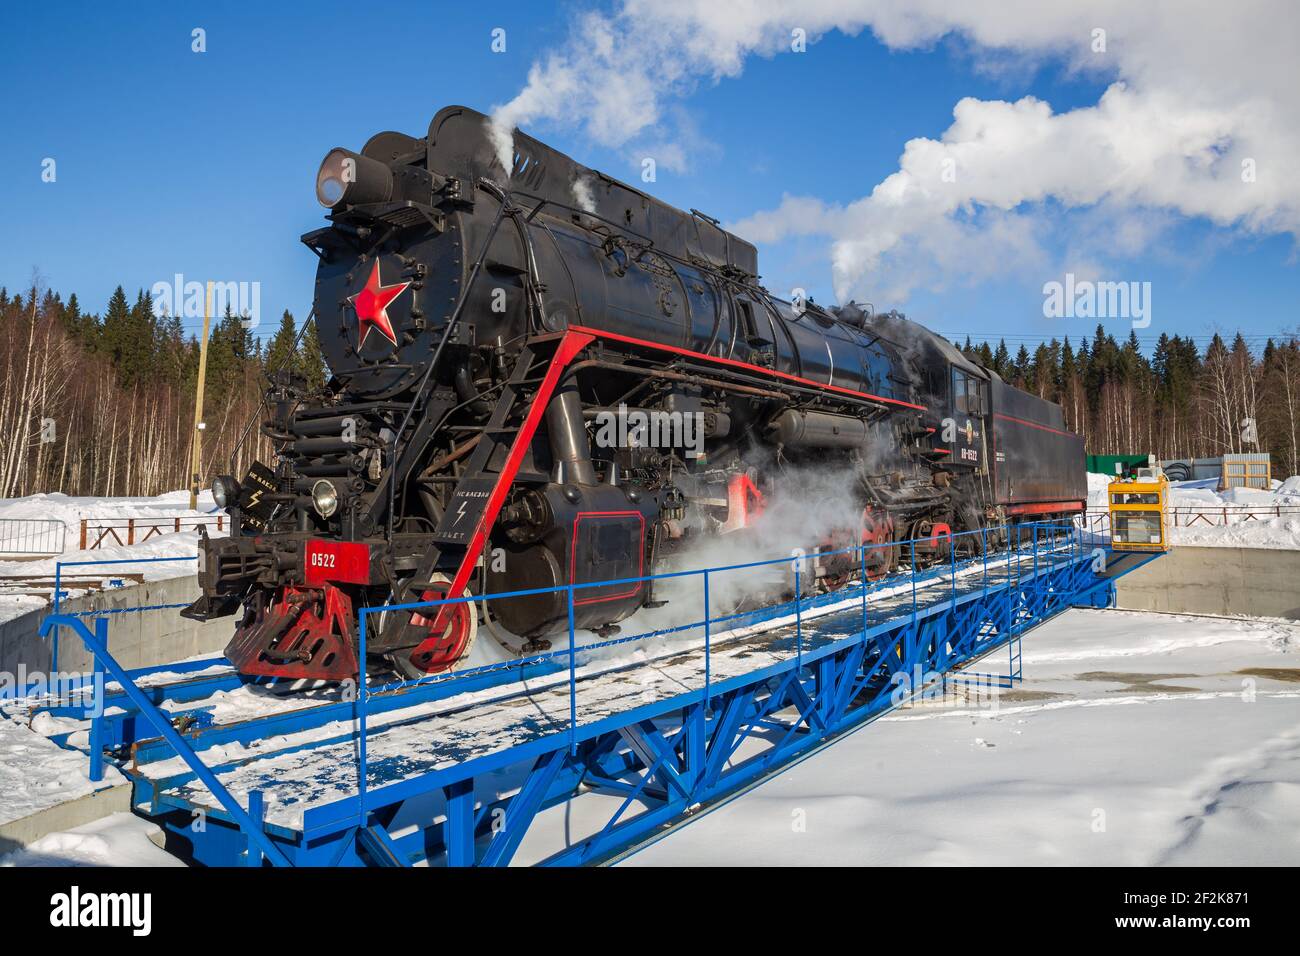 RUSKEALA, RUSSLAND - 10. MÄRZ 2021: Dampflokomotive LV-0522 auf dem Drehteller der Ruskeala Mountain Park Station in Karelia Stockfoto